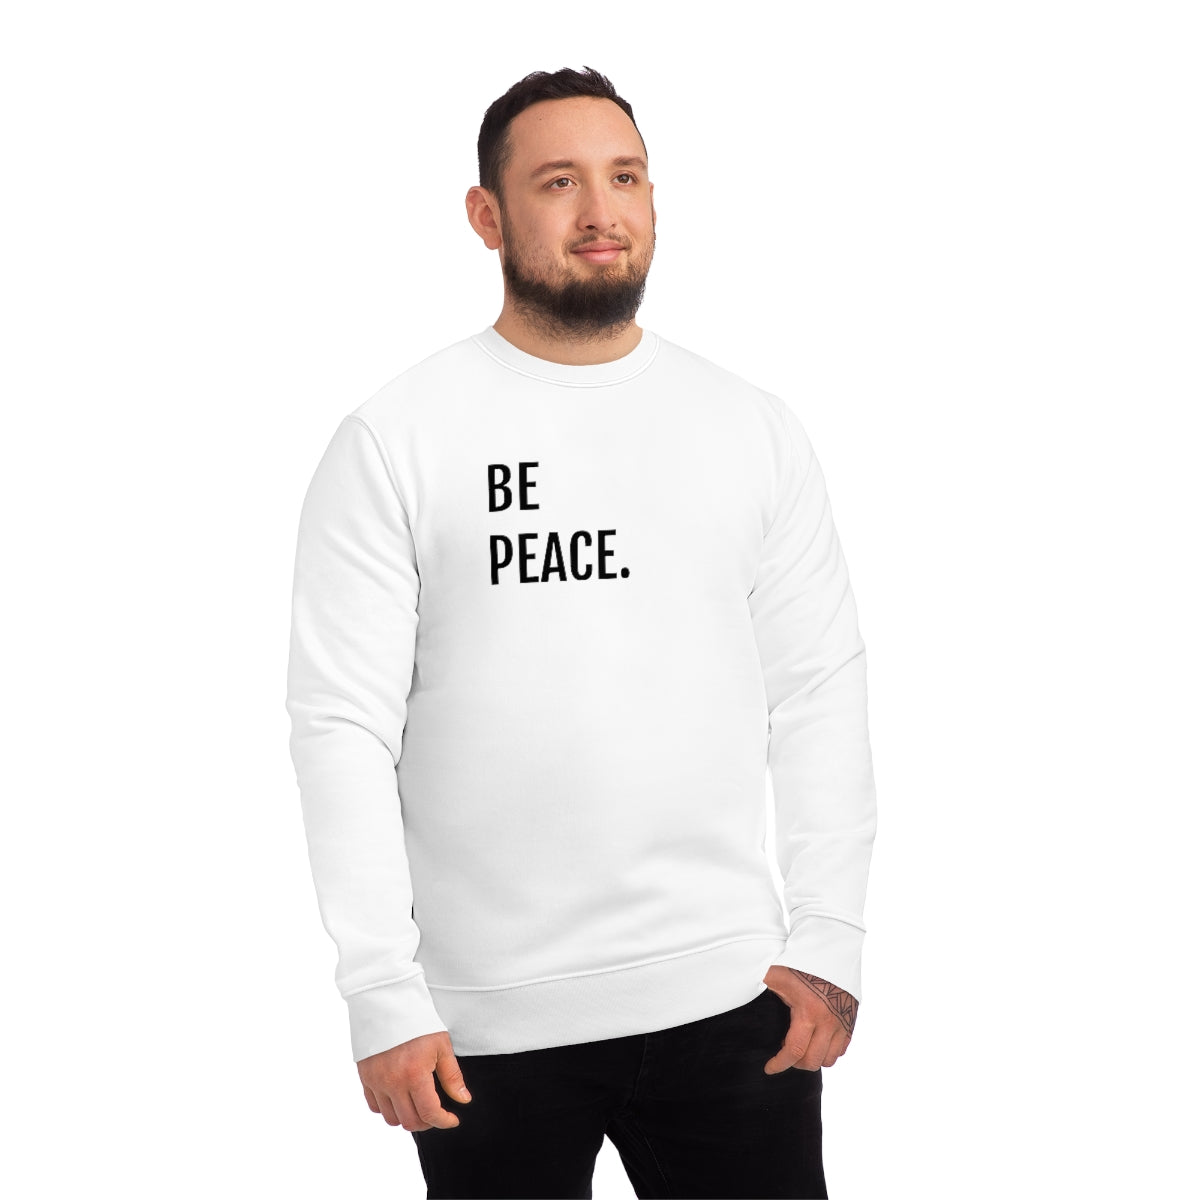 BE PEACE. - Unisex Crewneck